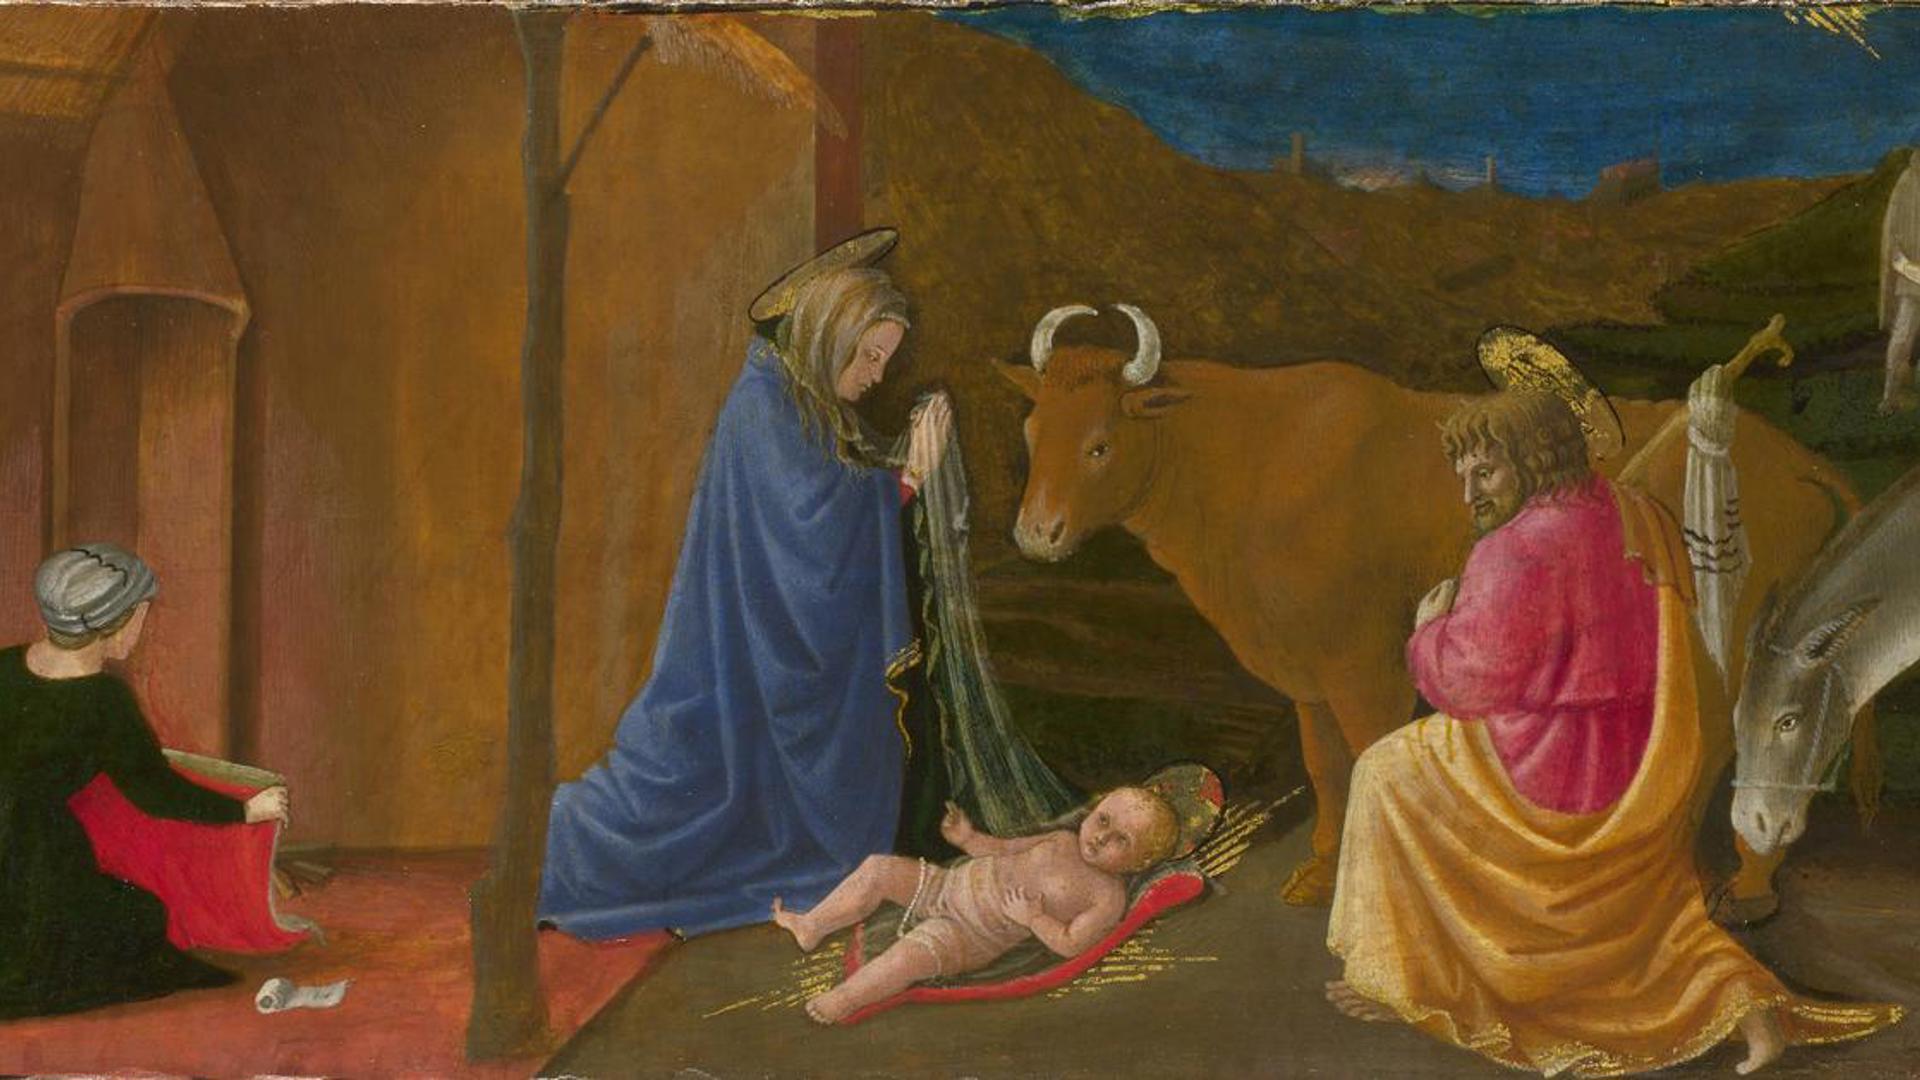 The Nativity by Master of the Castello Nativity